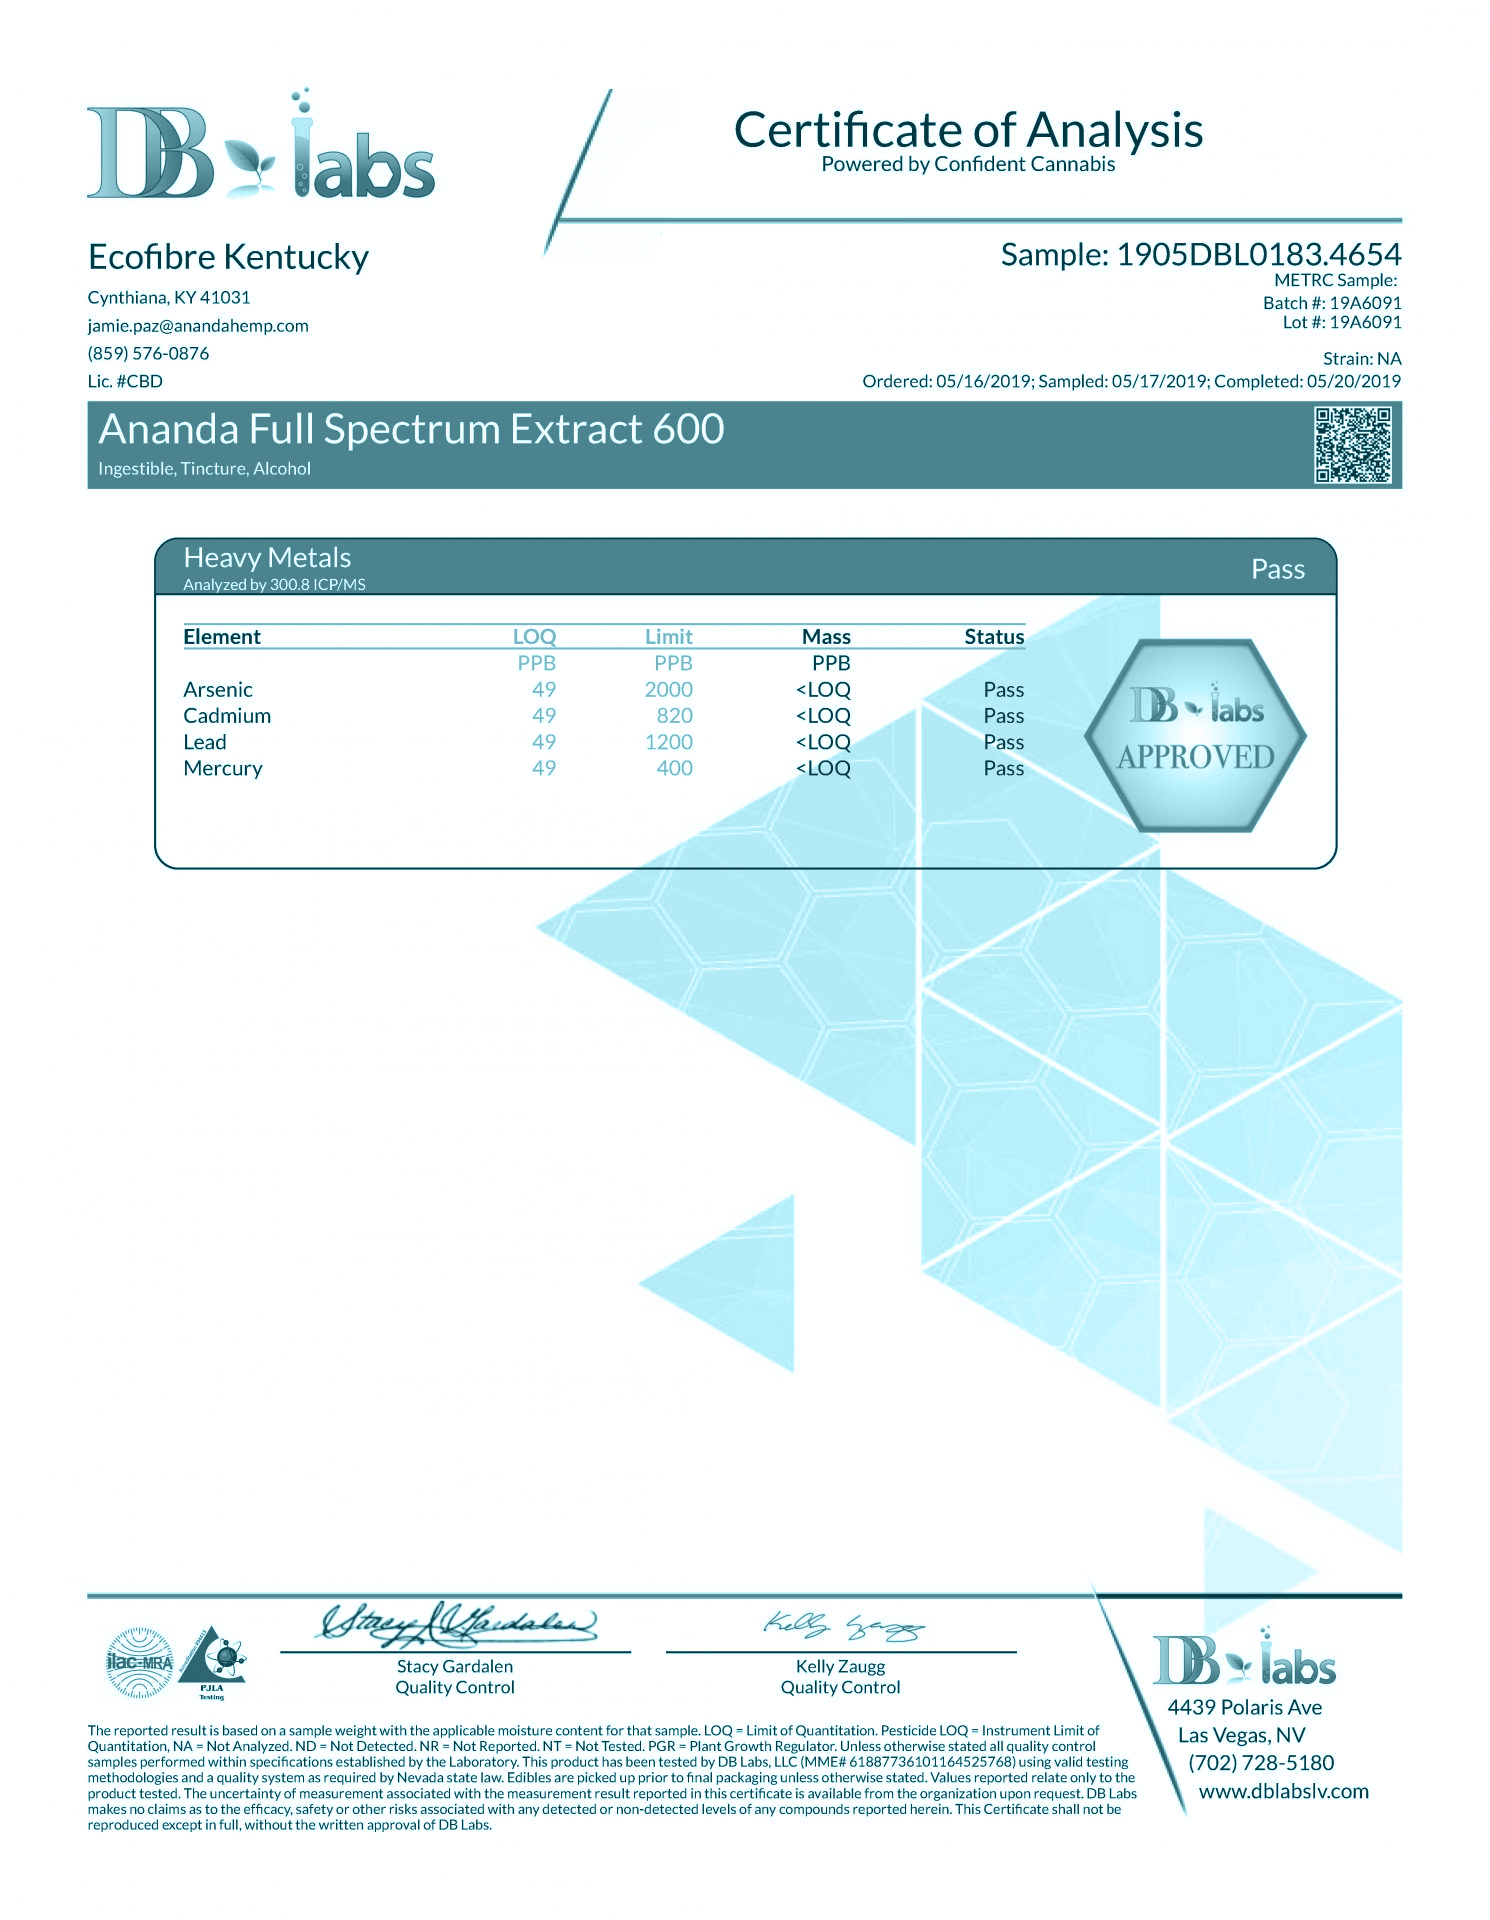 CBD Certificate of Analysis for Heavy Metal Testing